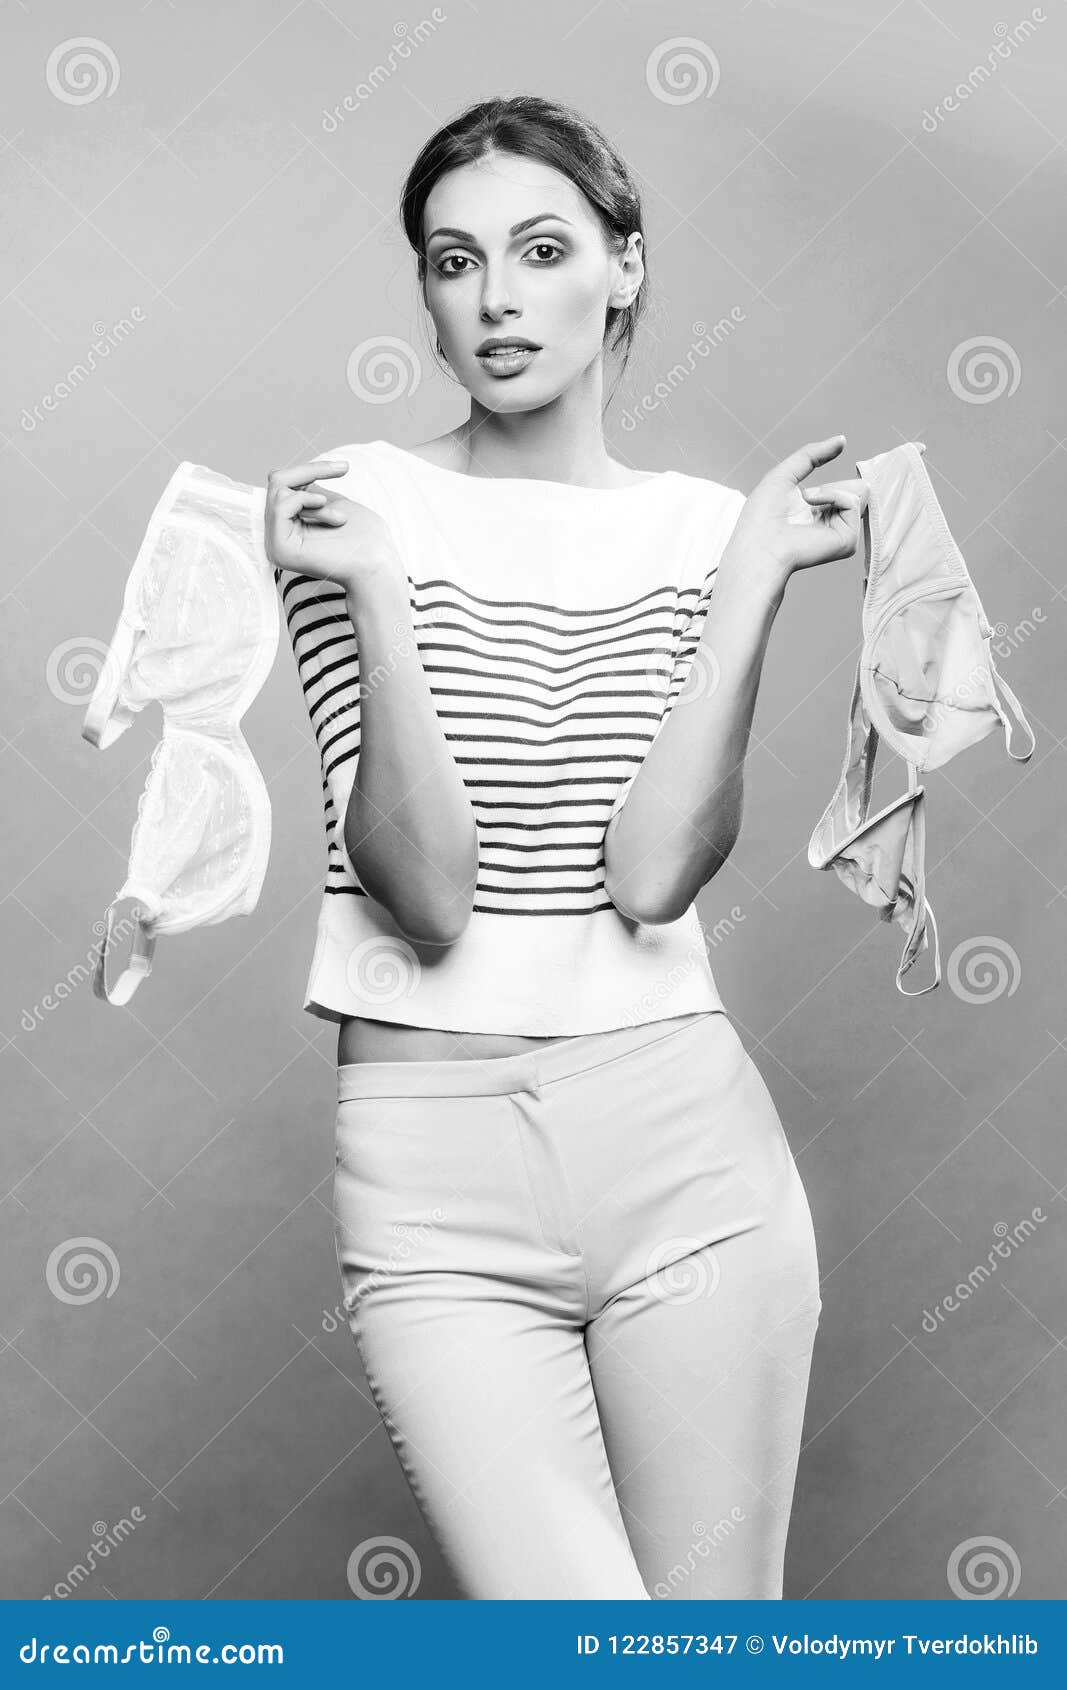 https://thumbs.dreamstime.com/z/pretty-stylish-woman-bra-studio-young-girl-glamour-makeup-face-striped-fashionable-cloth-slim-sexy-body-choosing-122857347.jpg